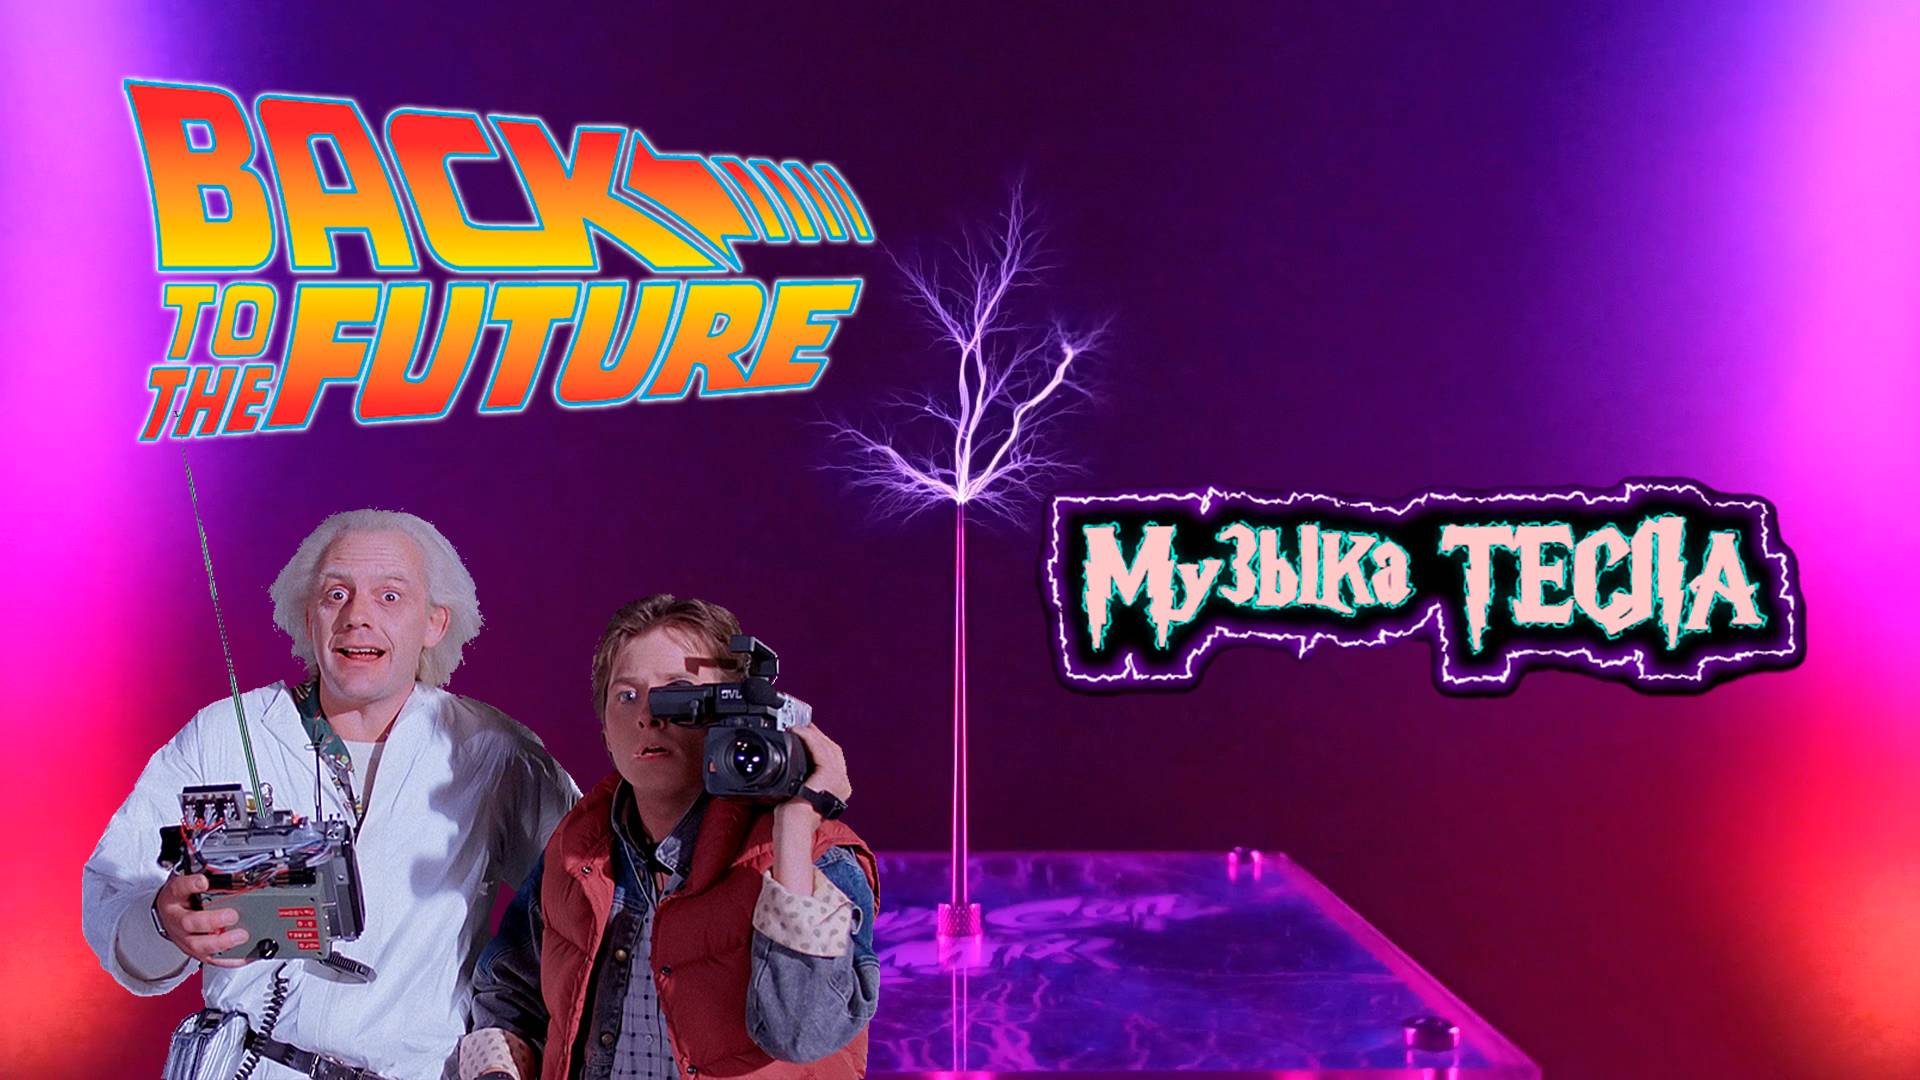 The Back to the Future Theme Tesla Coil Mix #музыкатесла